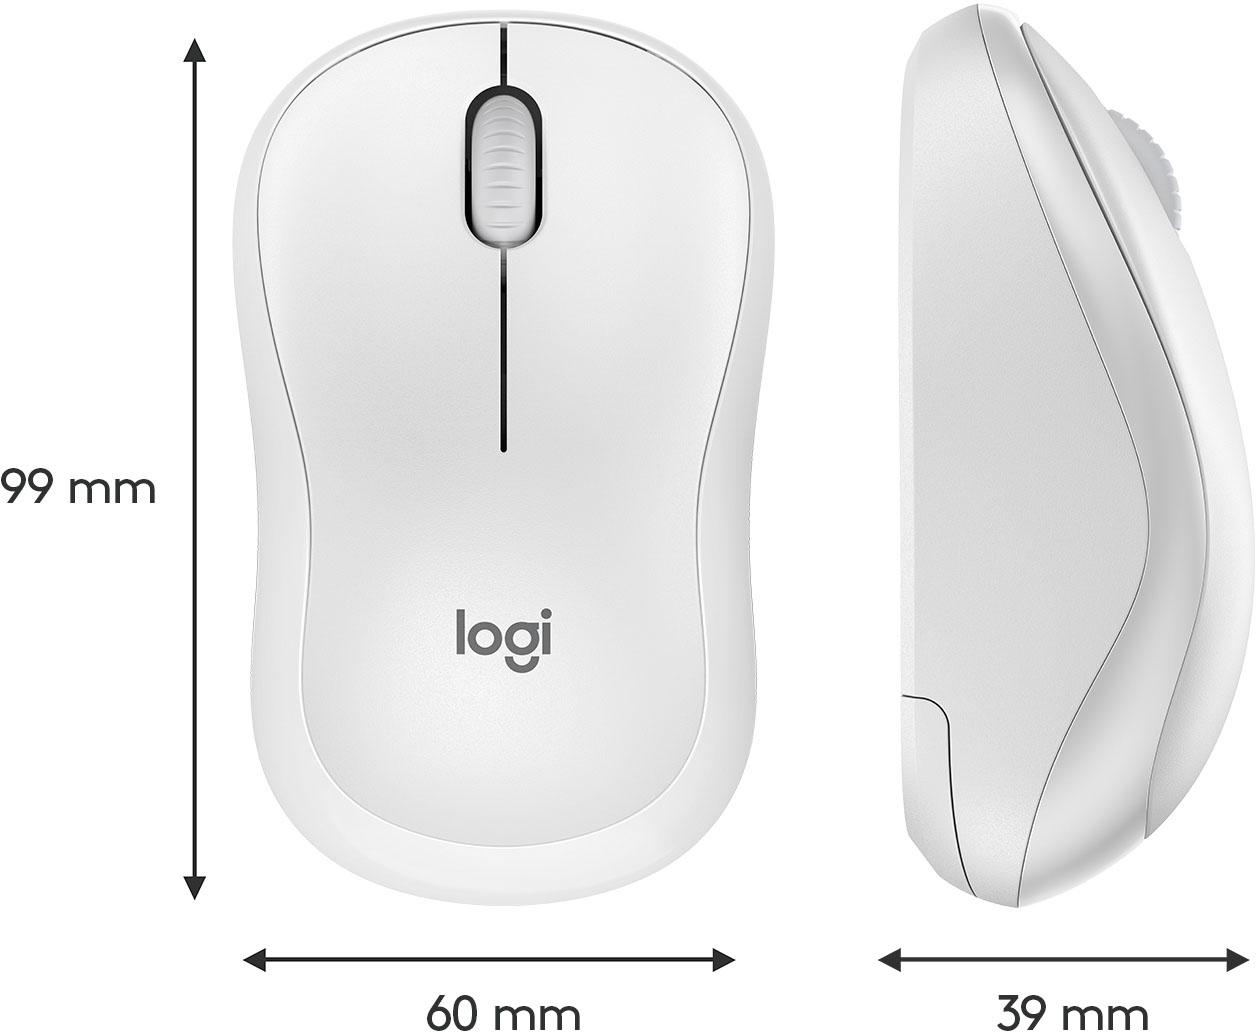 Logitech - M220 SILENT Wireless Optical Ambidextrous Mouse - Off-White